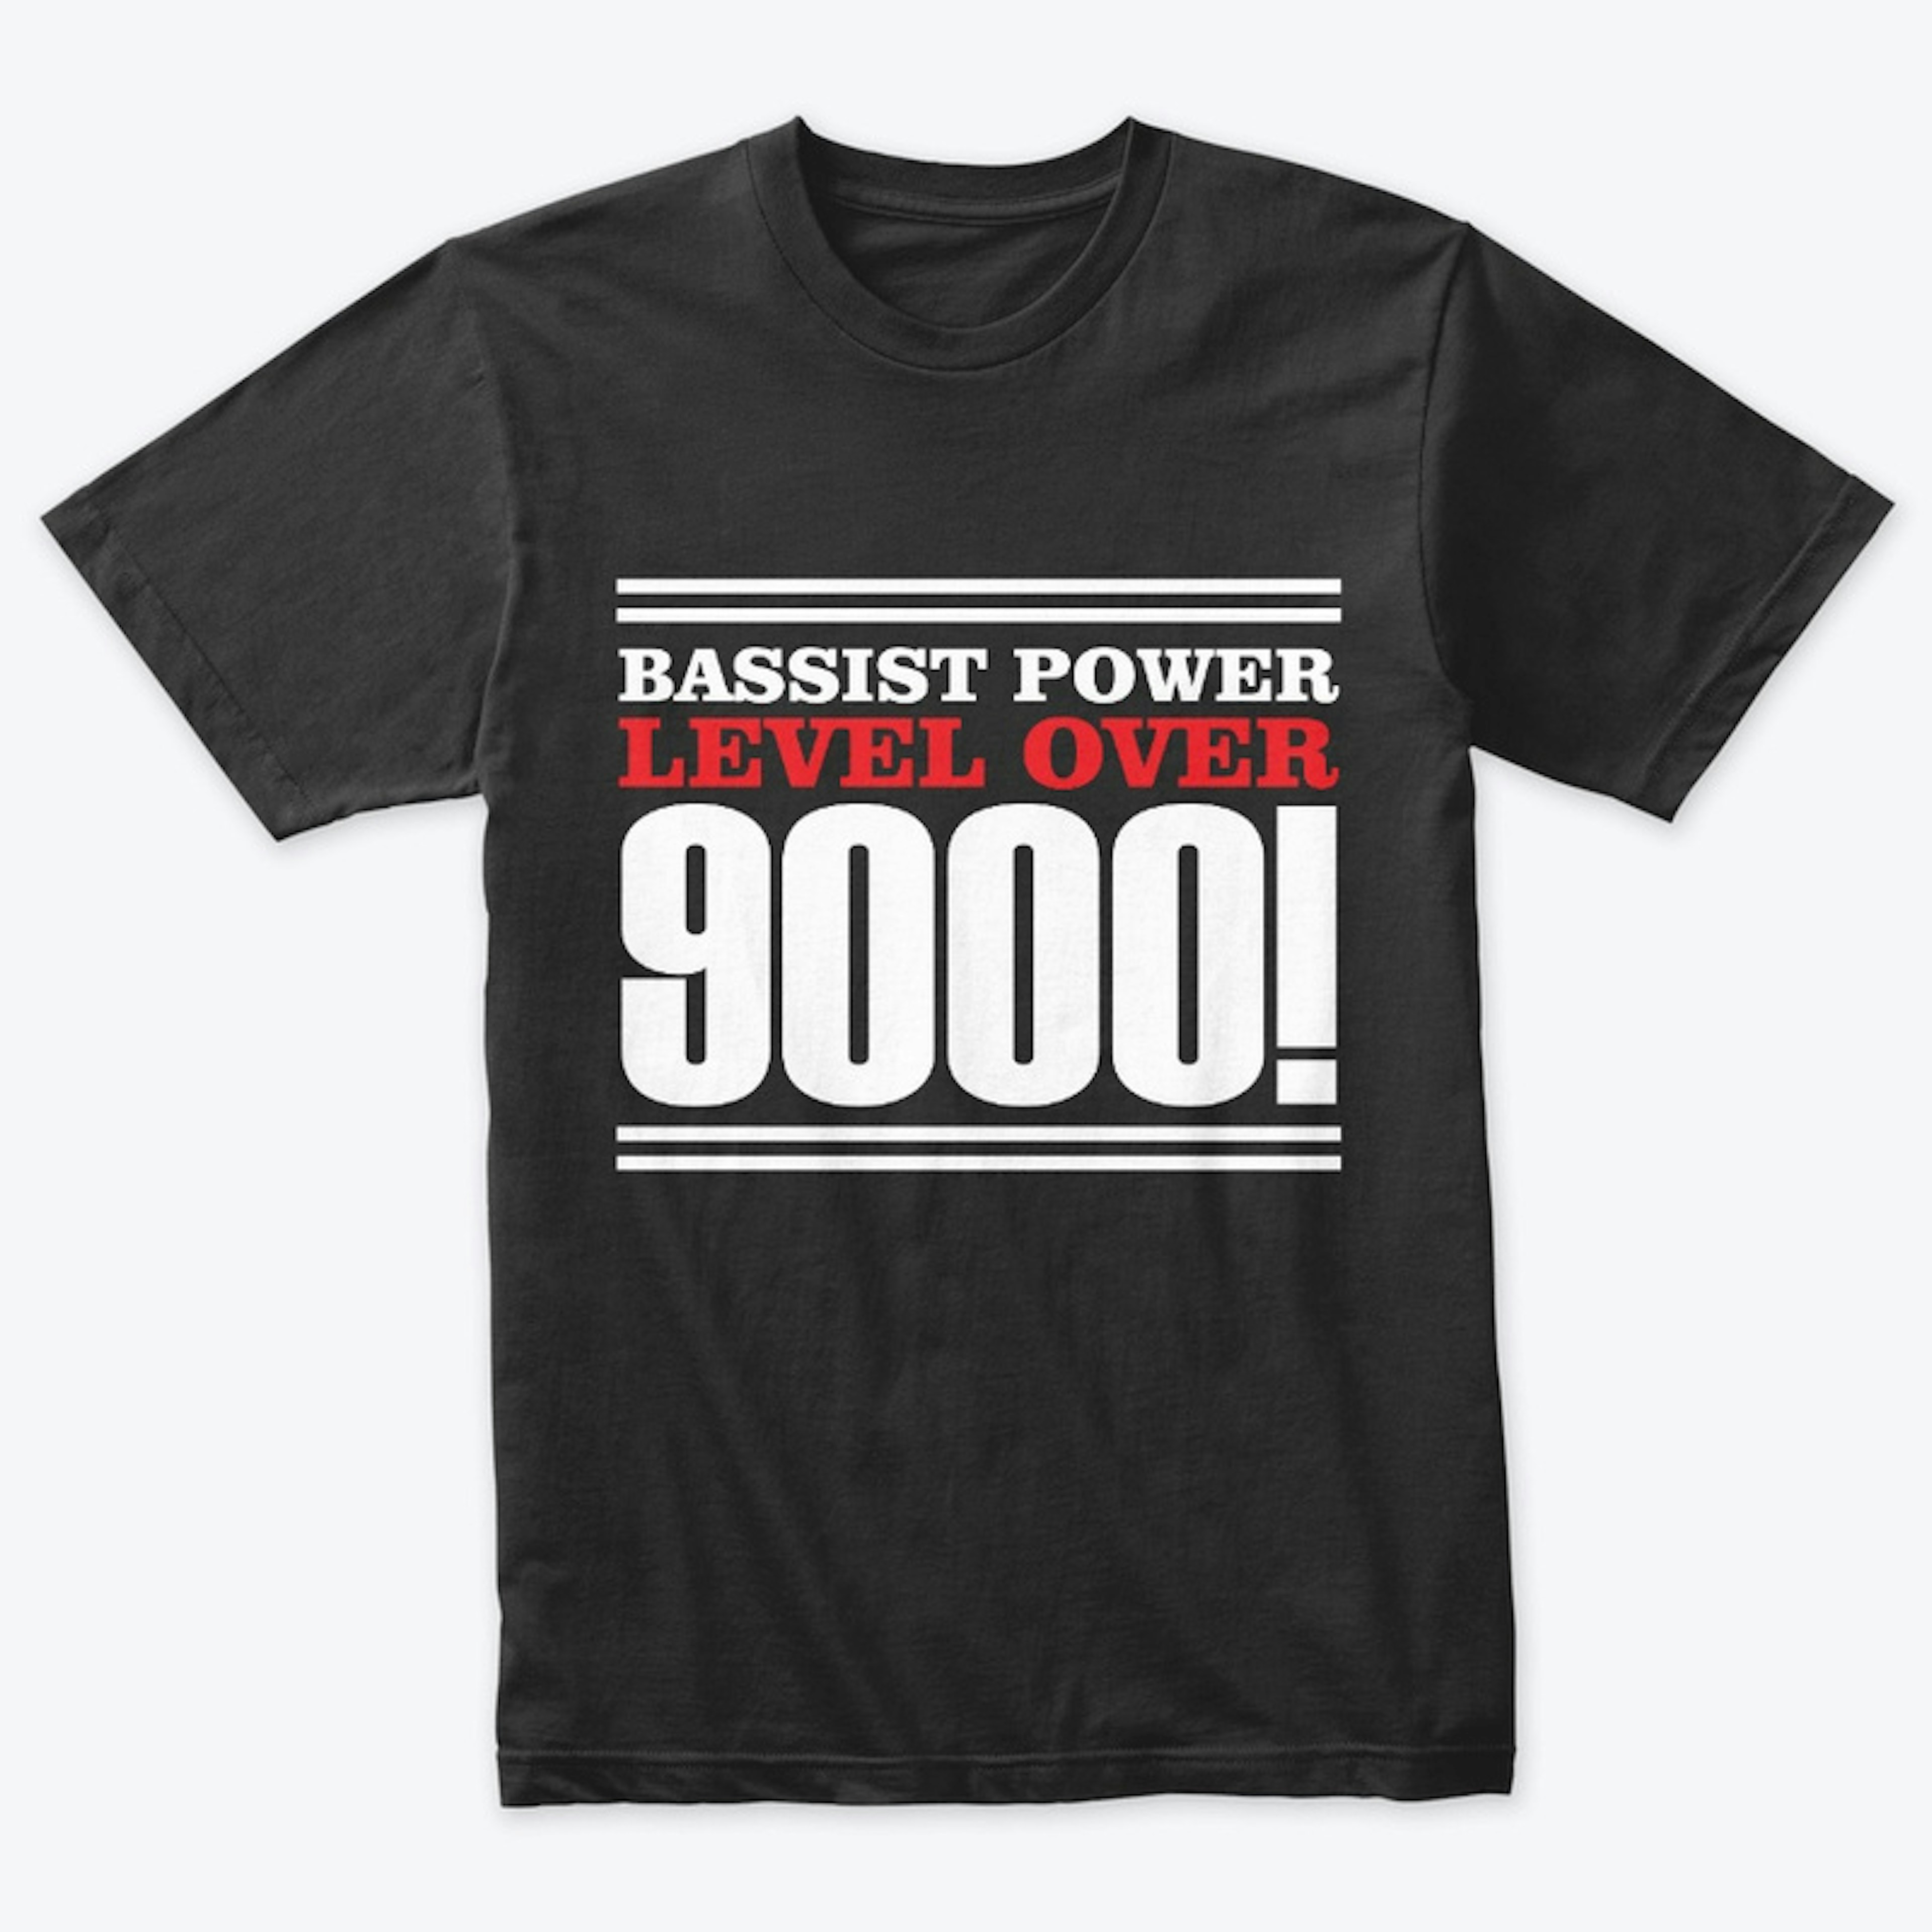 Bassist power level over 9000 shirt